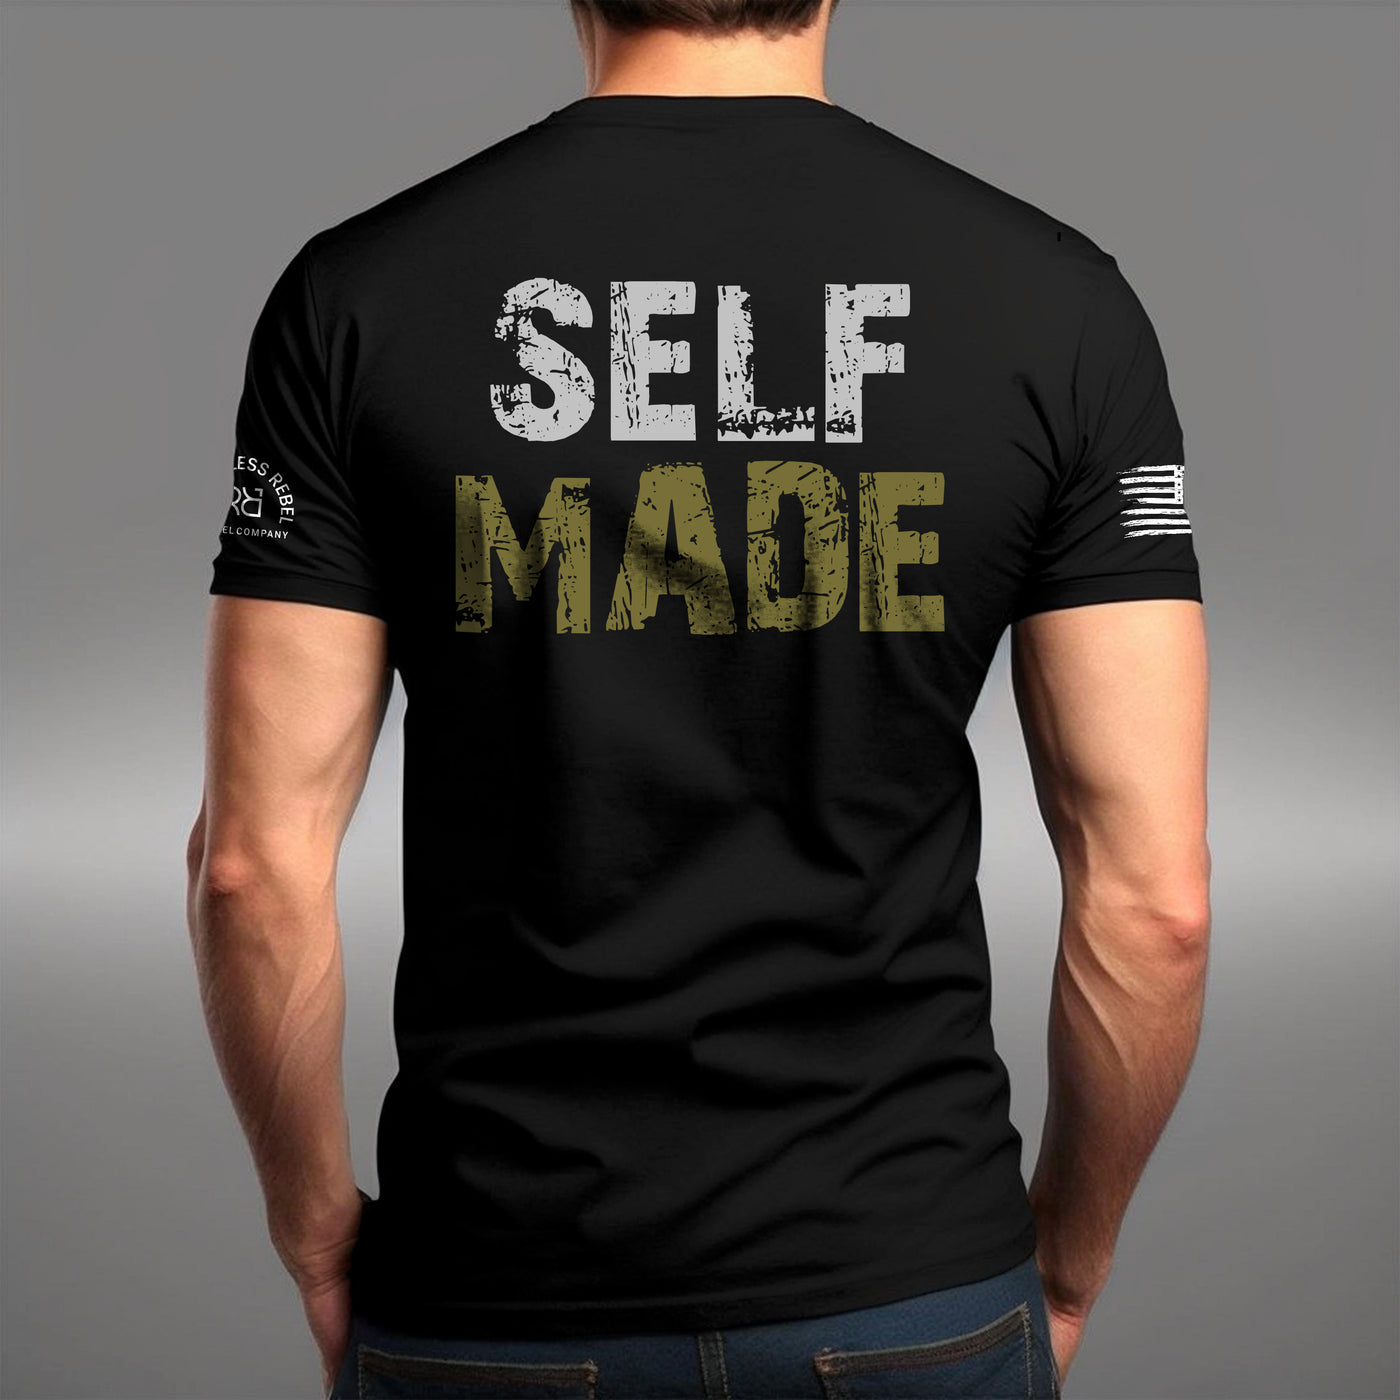 Self Made | Premium Men's Tee